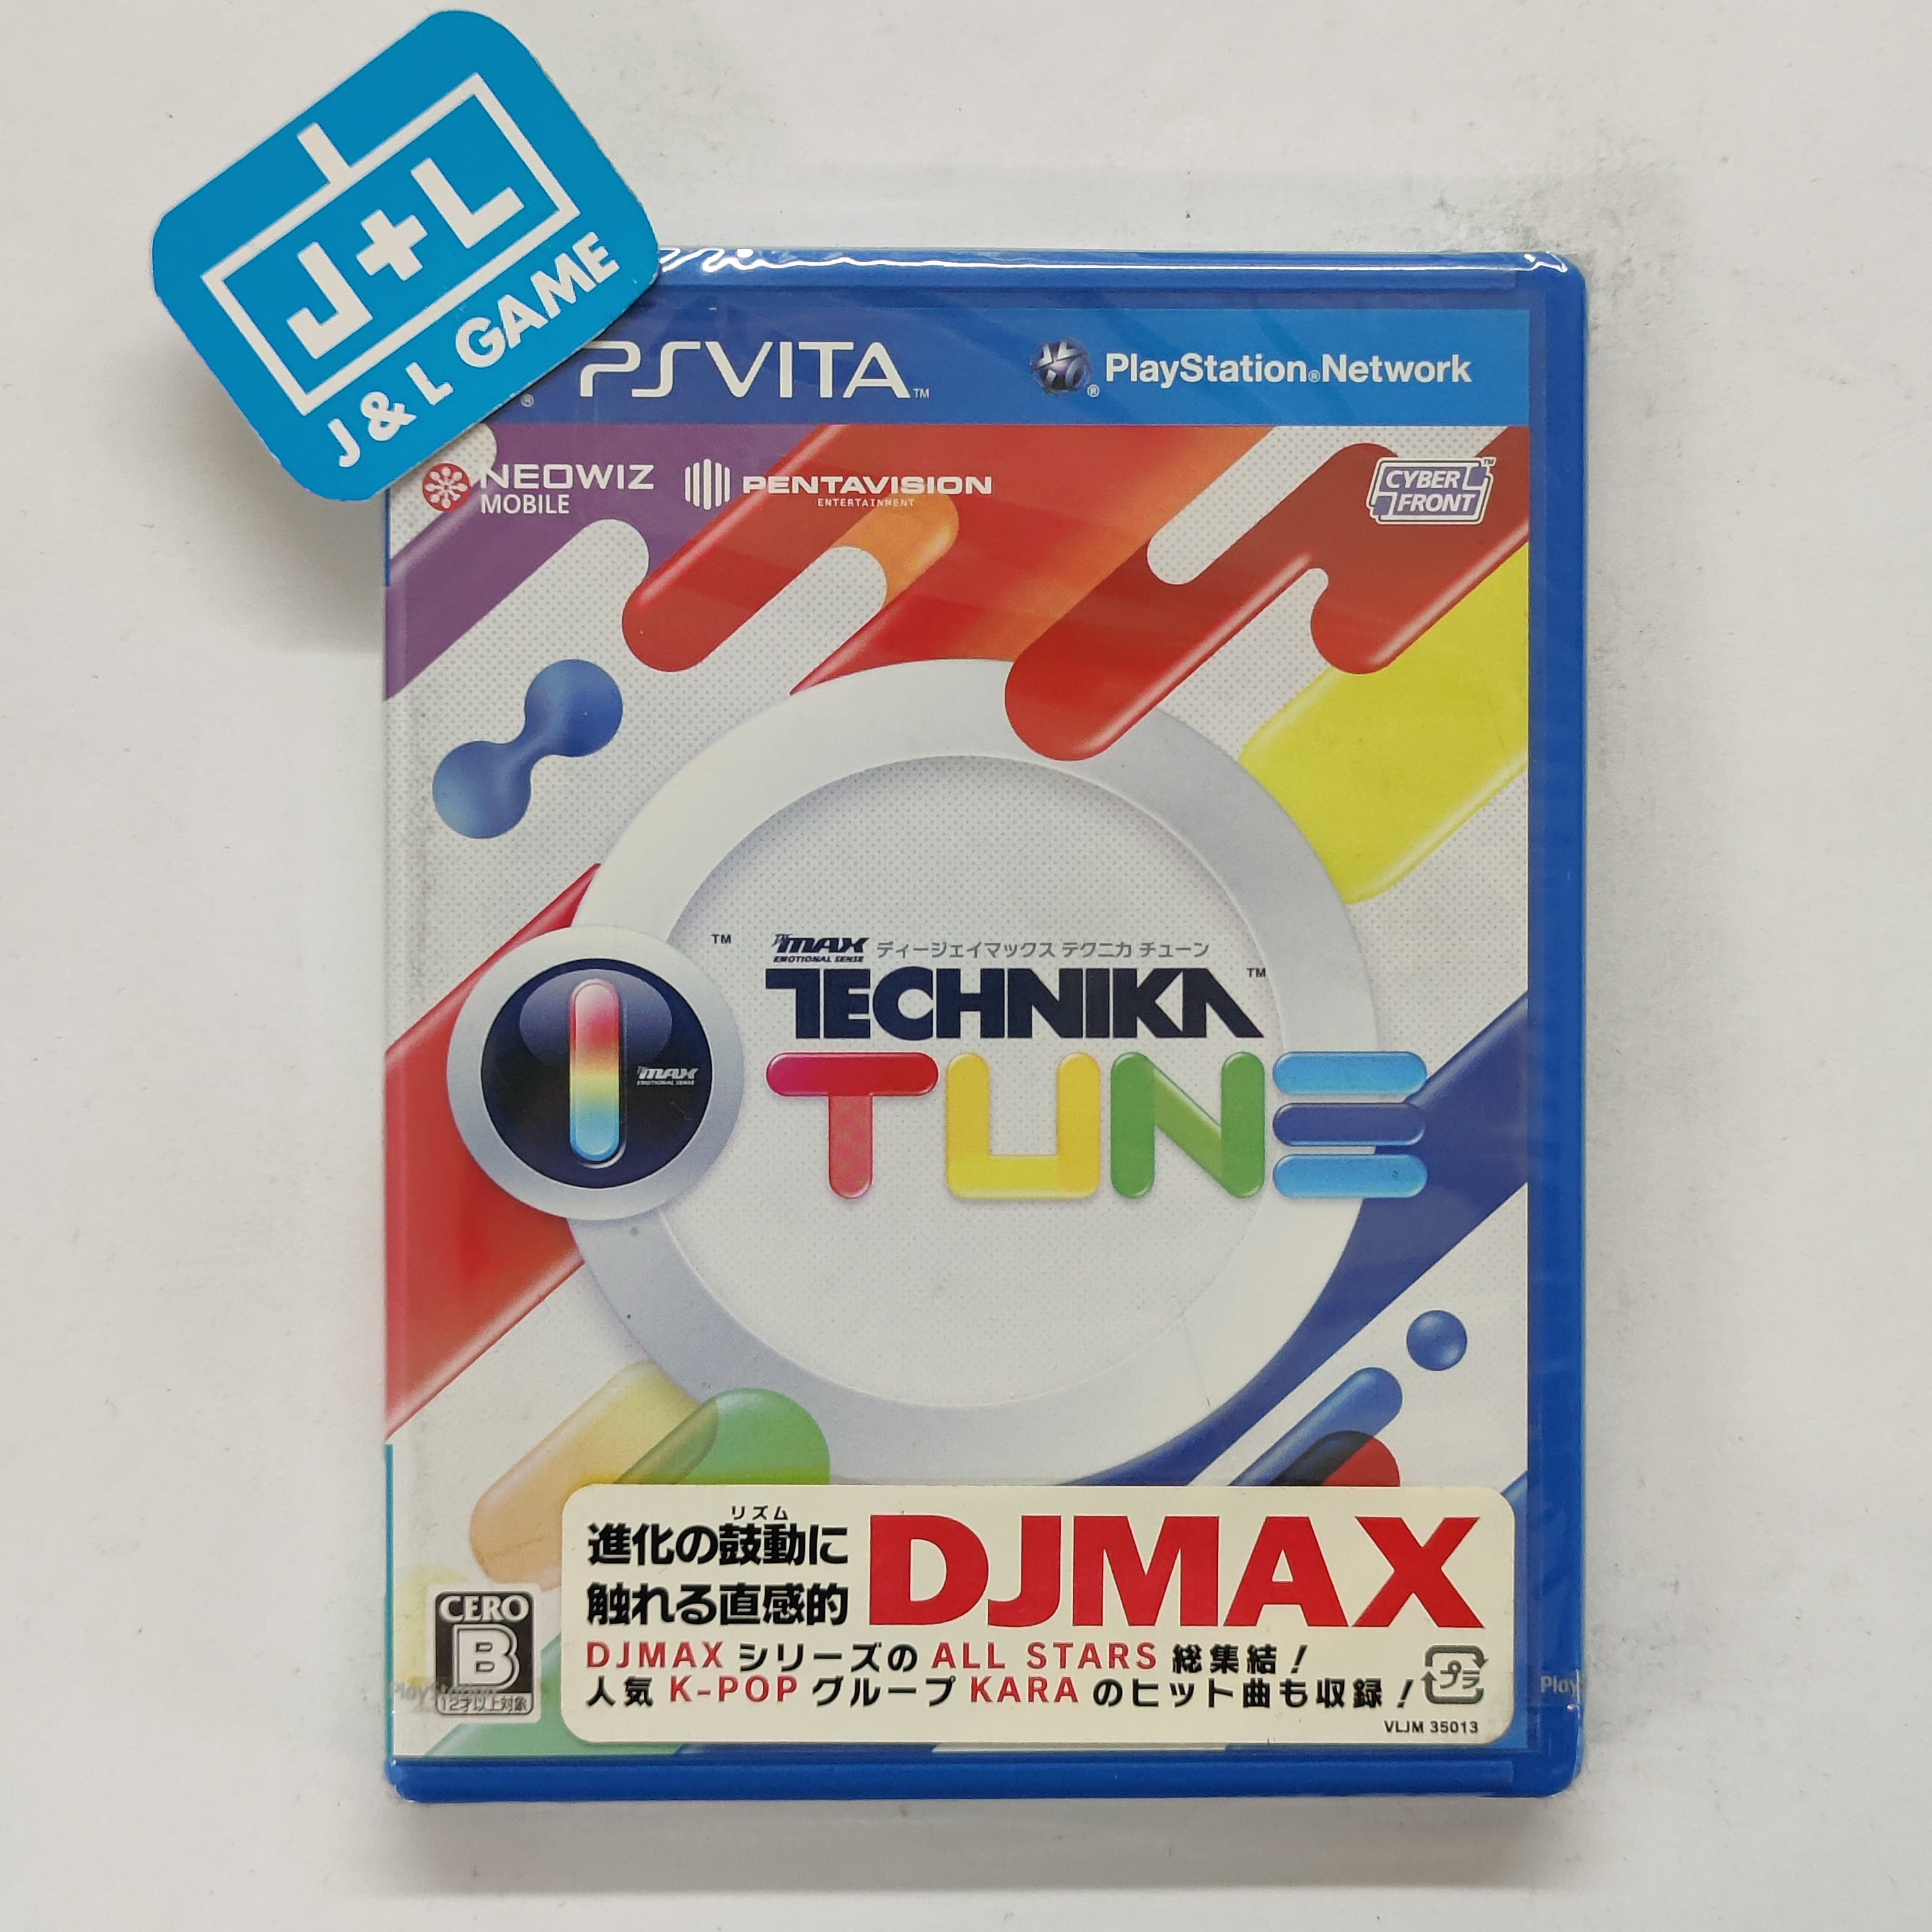 DJMax Technika Tune - (PSV) PlayStation Vita (Japanese Import) Video Games CyberFront   